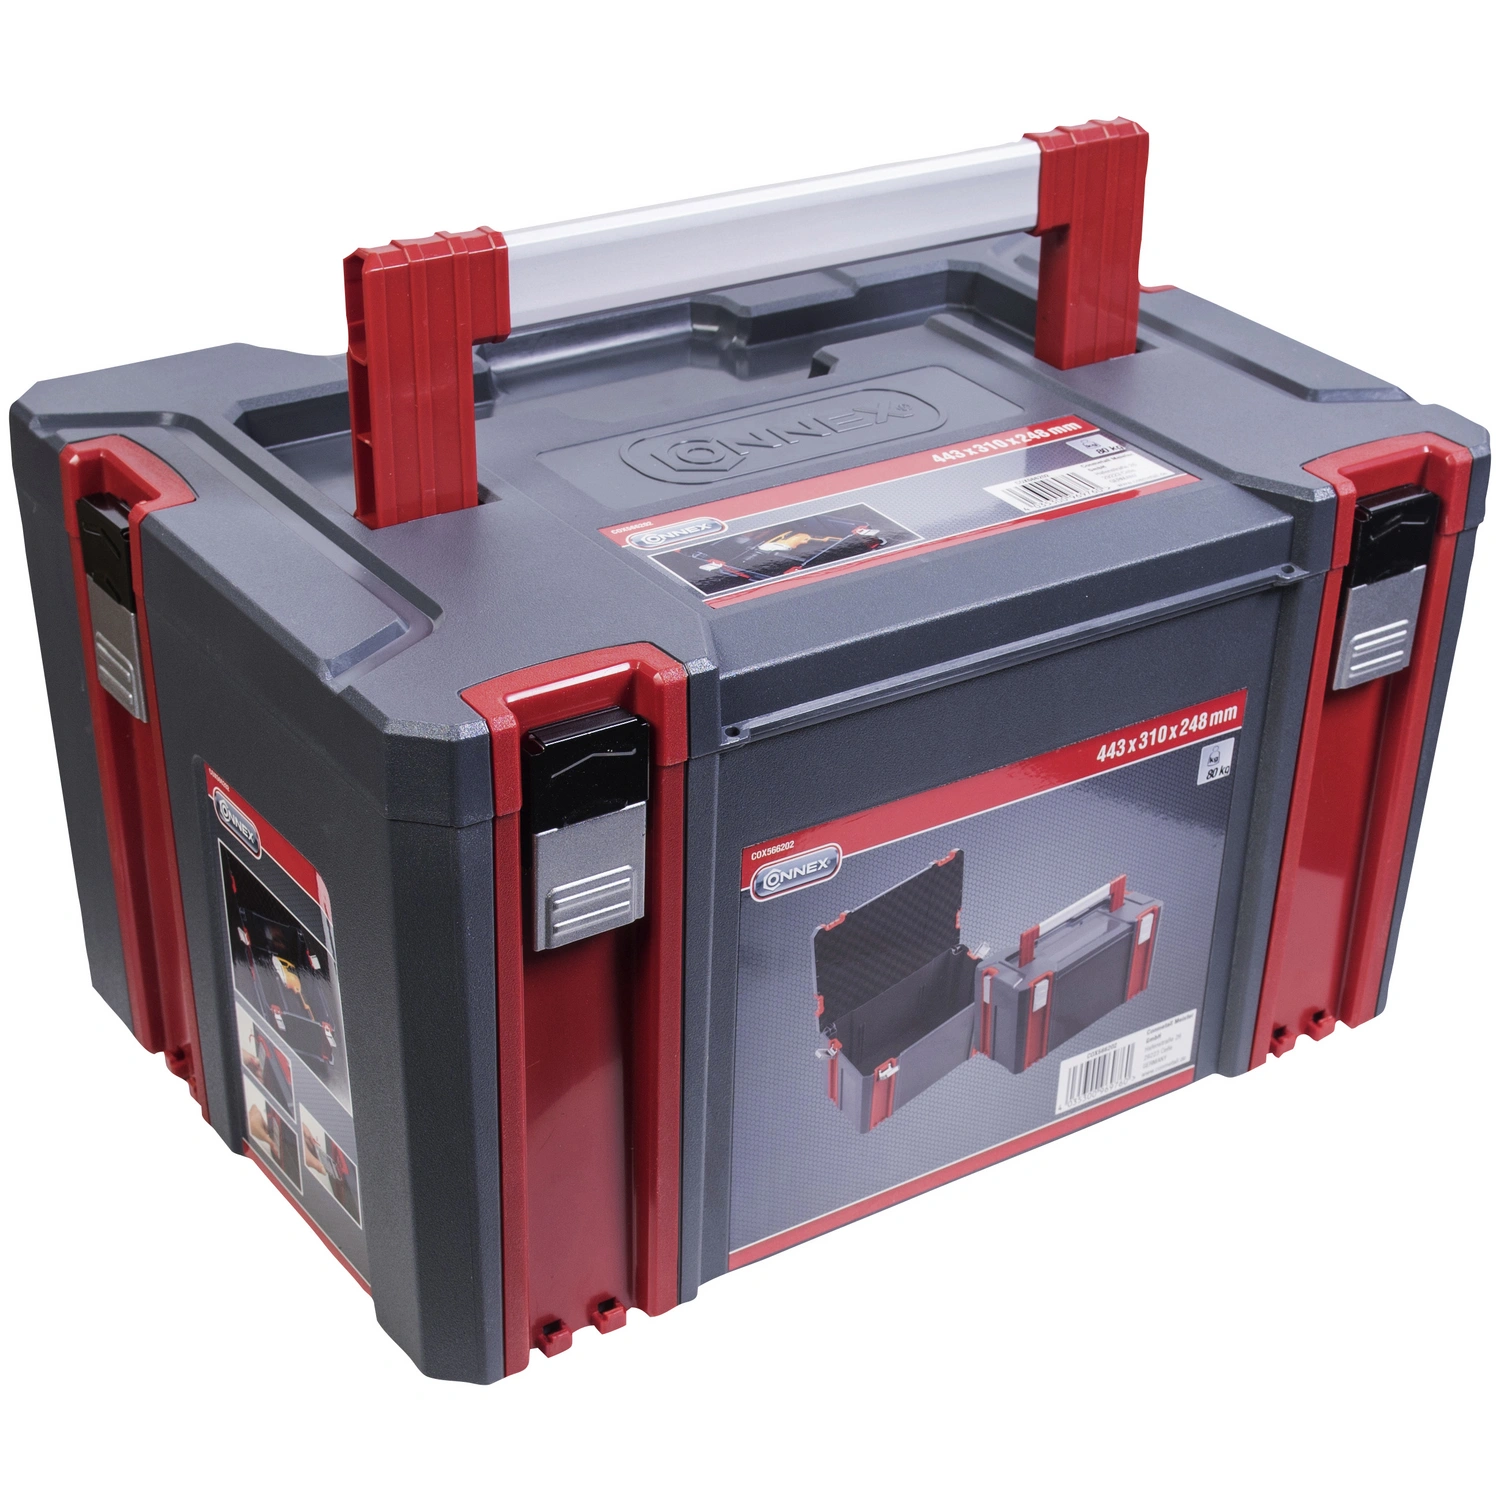 CONNEX Systembox, BxHxT: 44,3 x 24,8 x 31 cm, Kunststoff / Aluminium